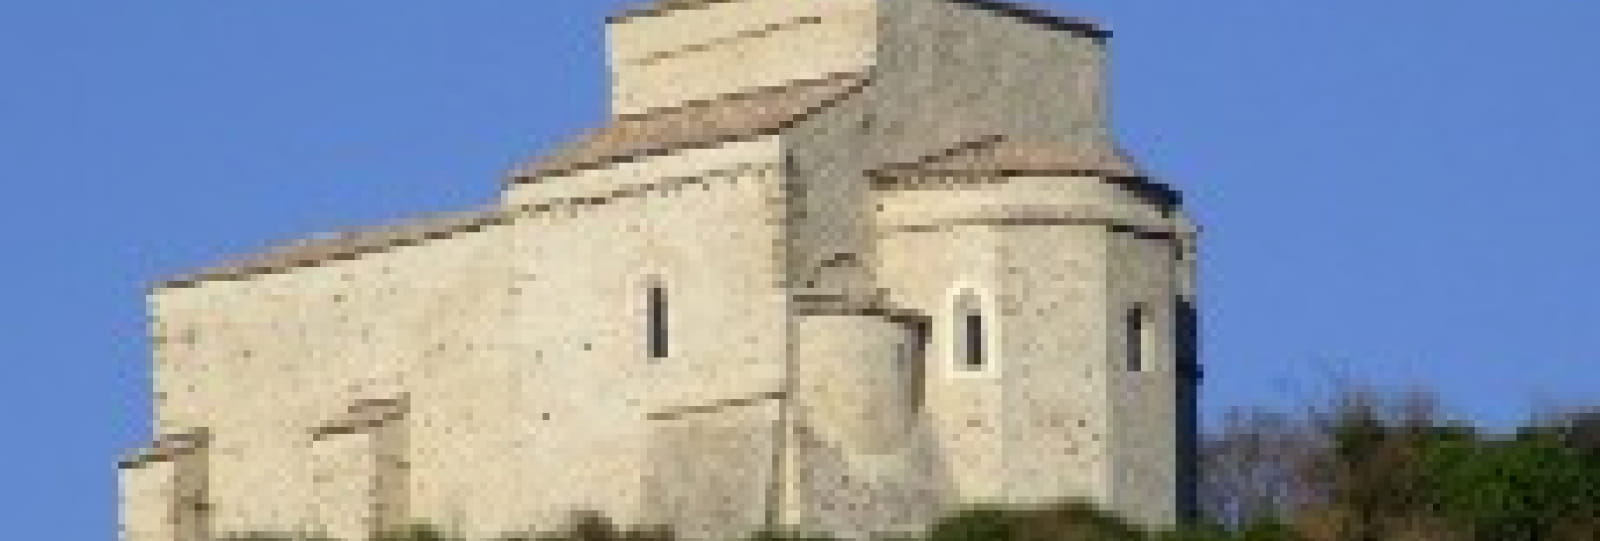 Eglise Saint-Marcel